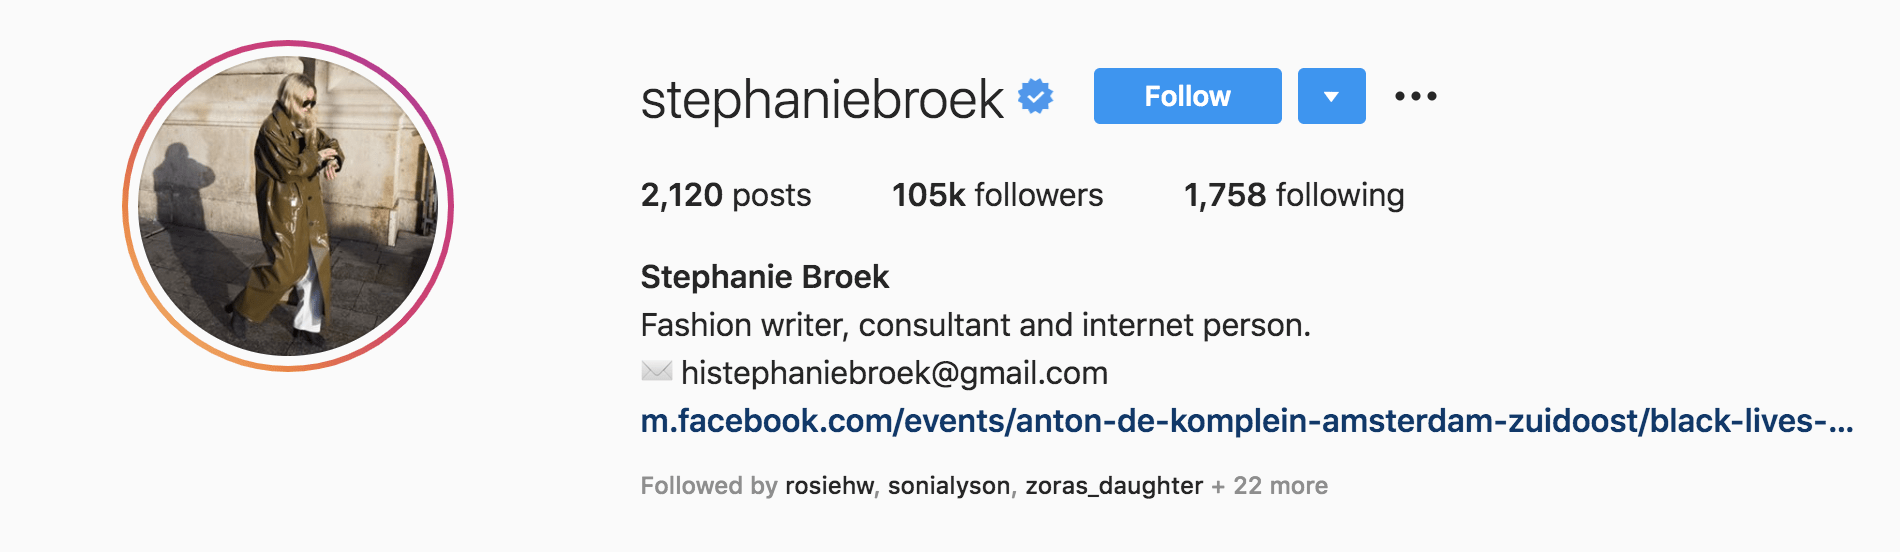 Top Fashion Influencers - Stephanie Broek